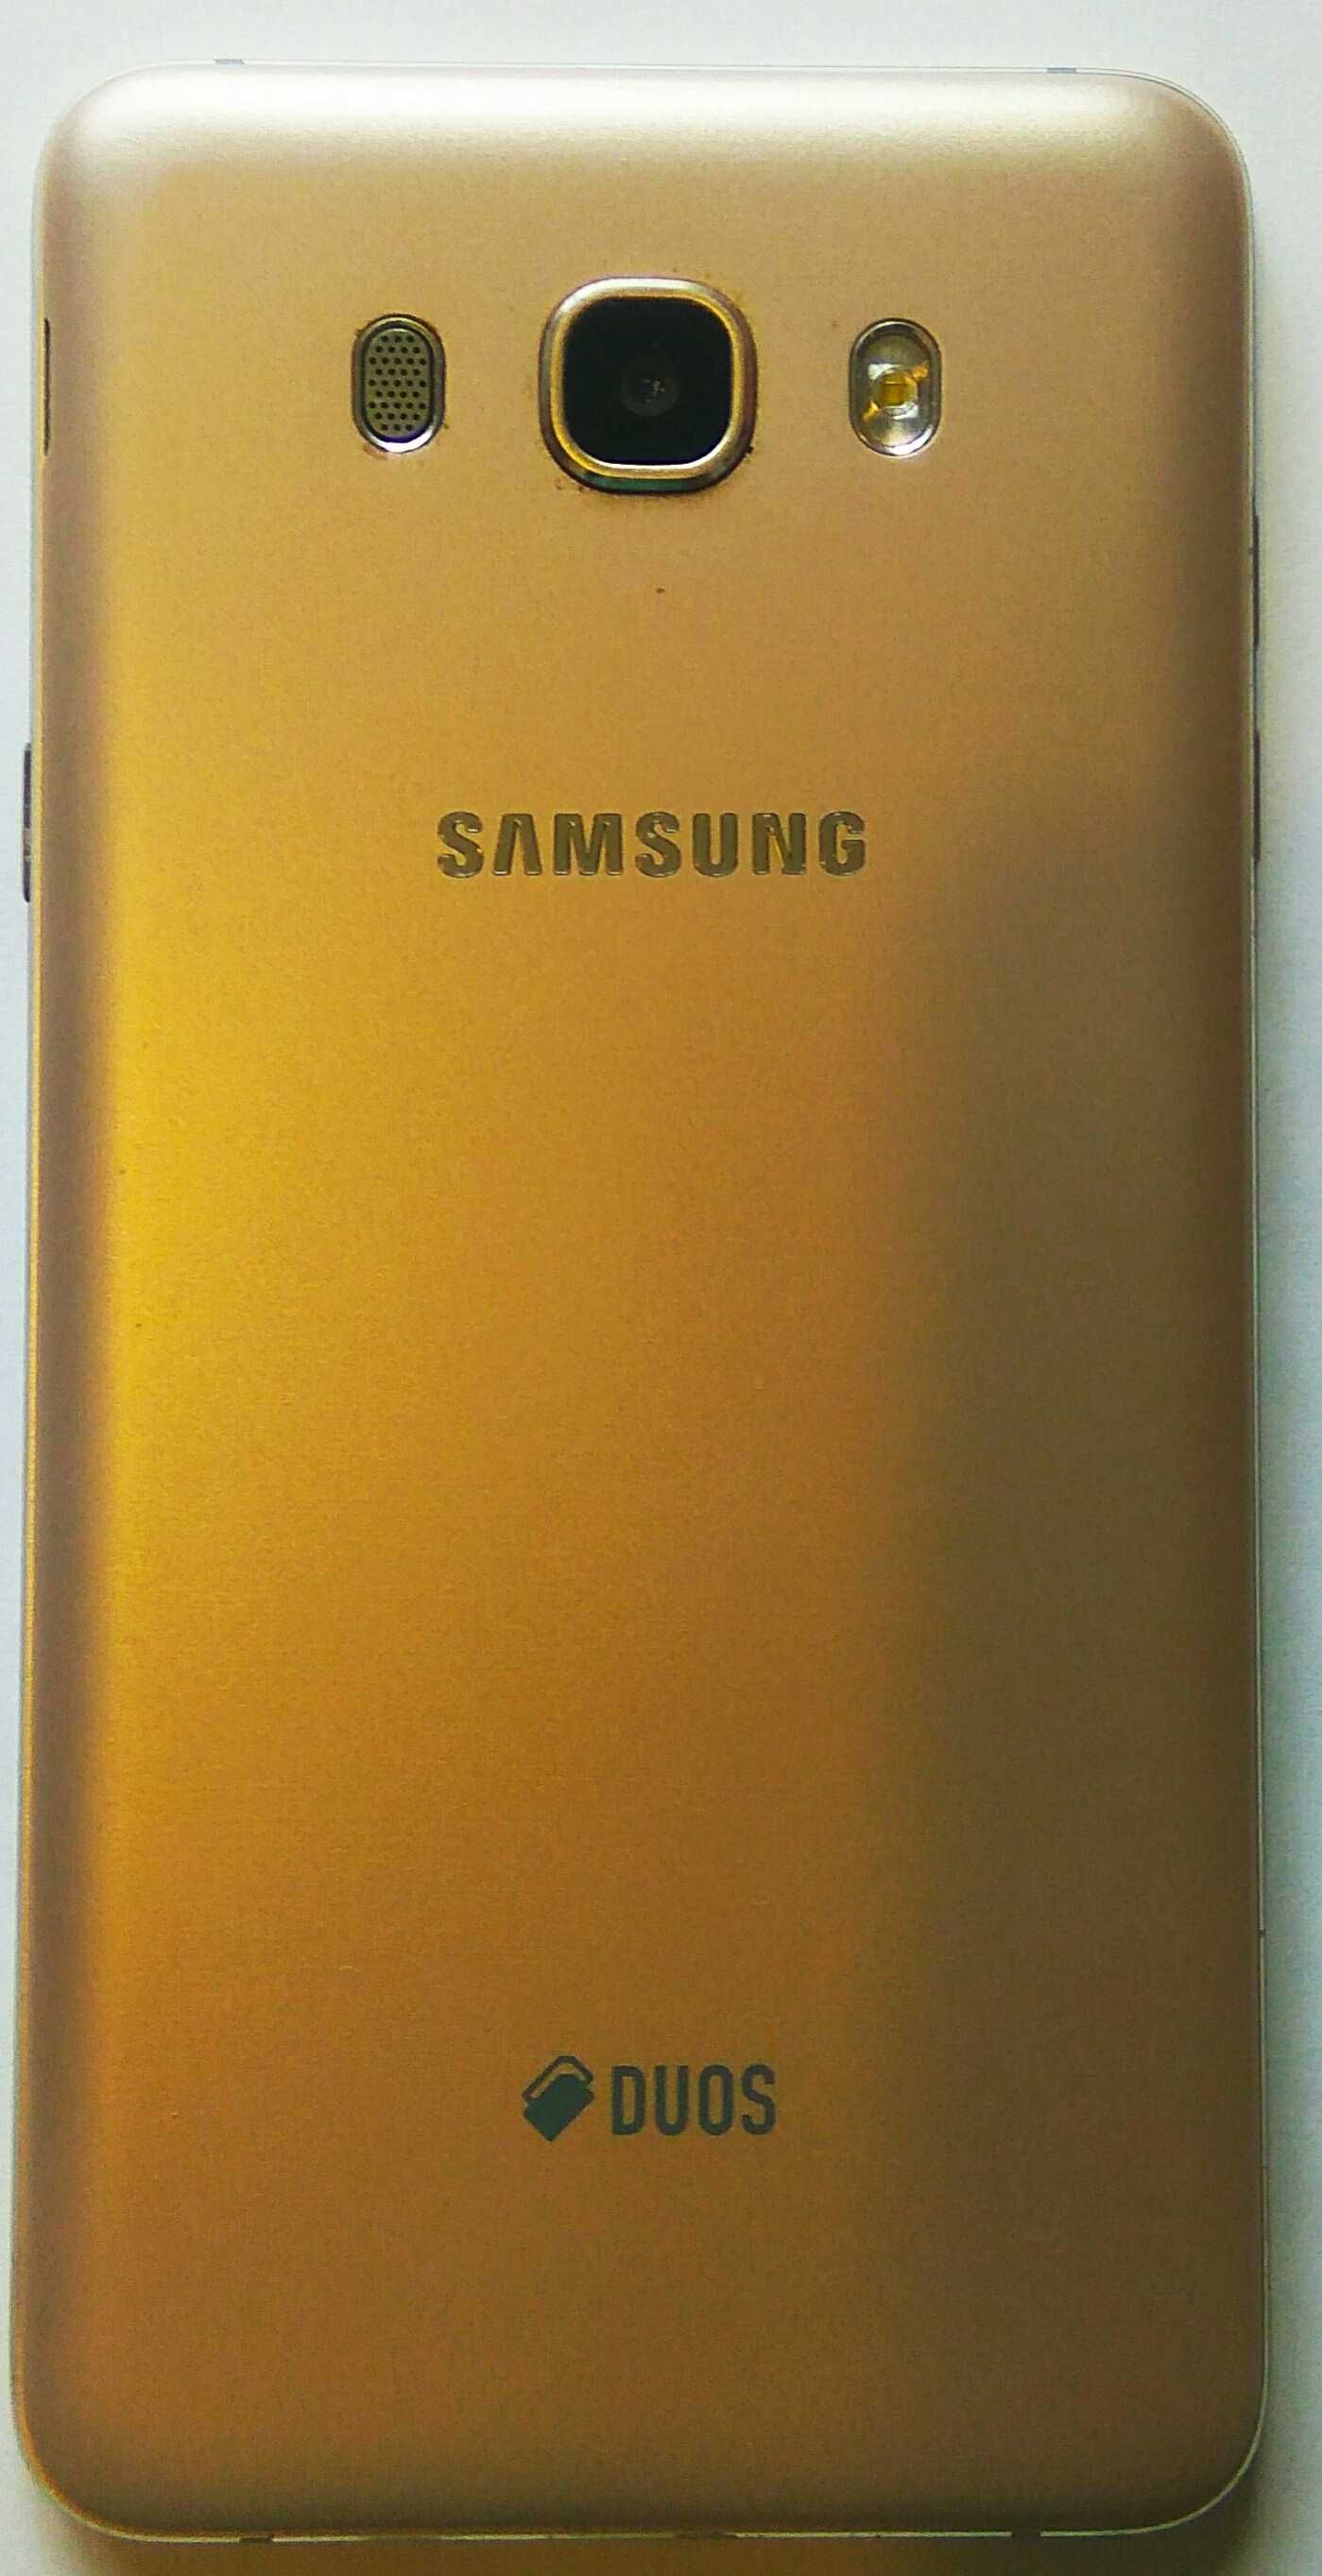 Смартфон Samsung Galaxy j7 2016